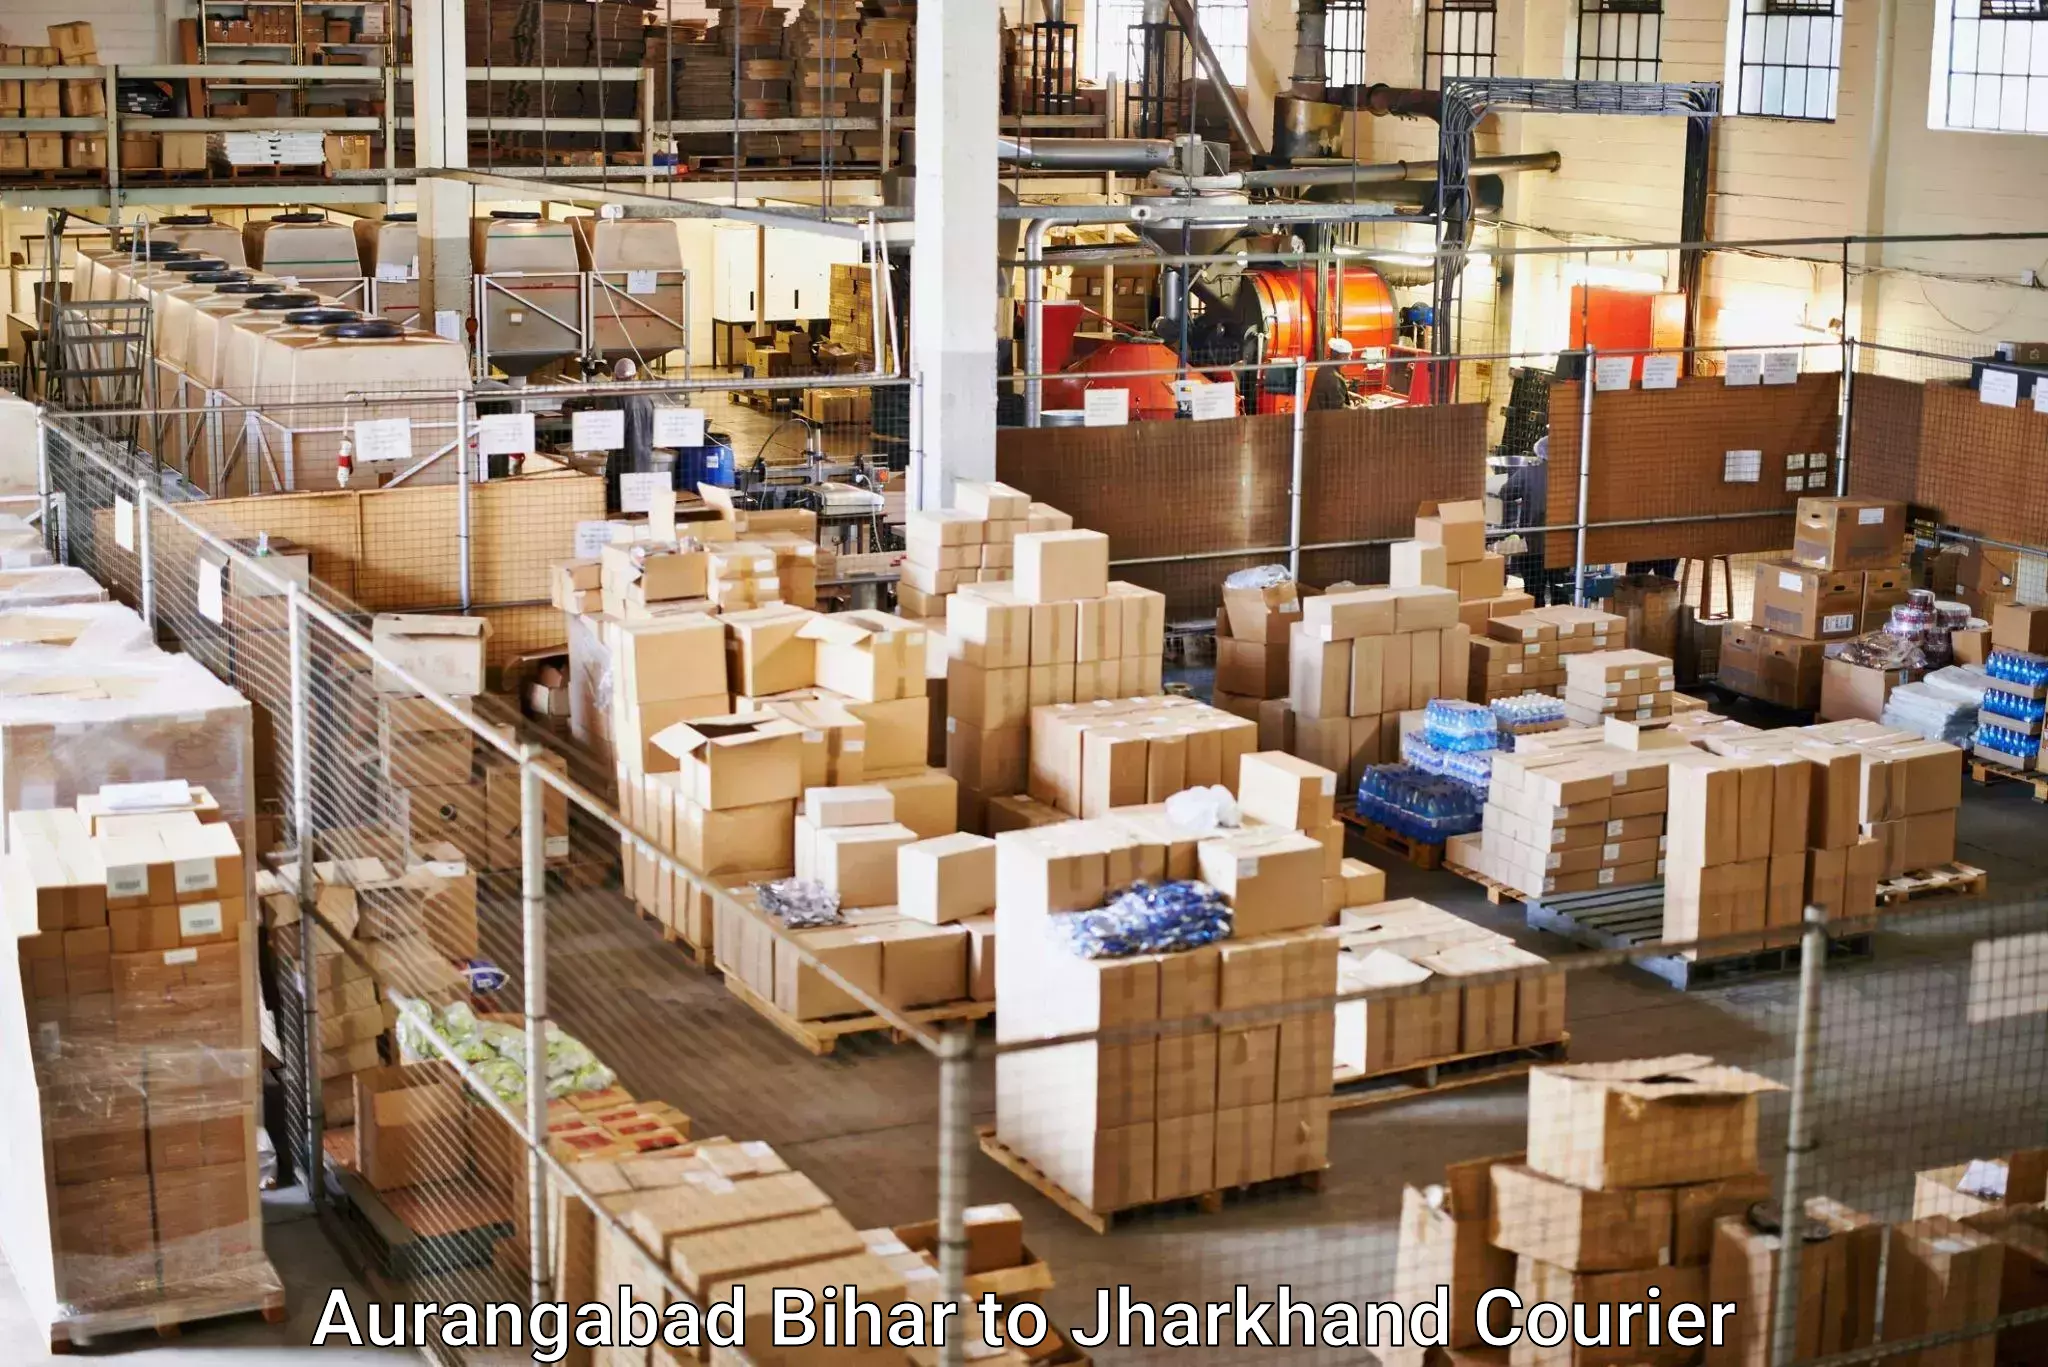 Cargo delivery service Aurangabad Bihar to Jharkhand